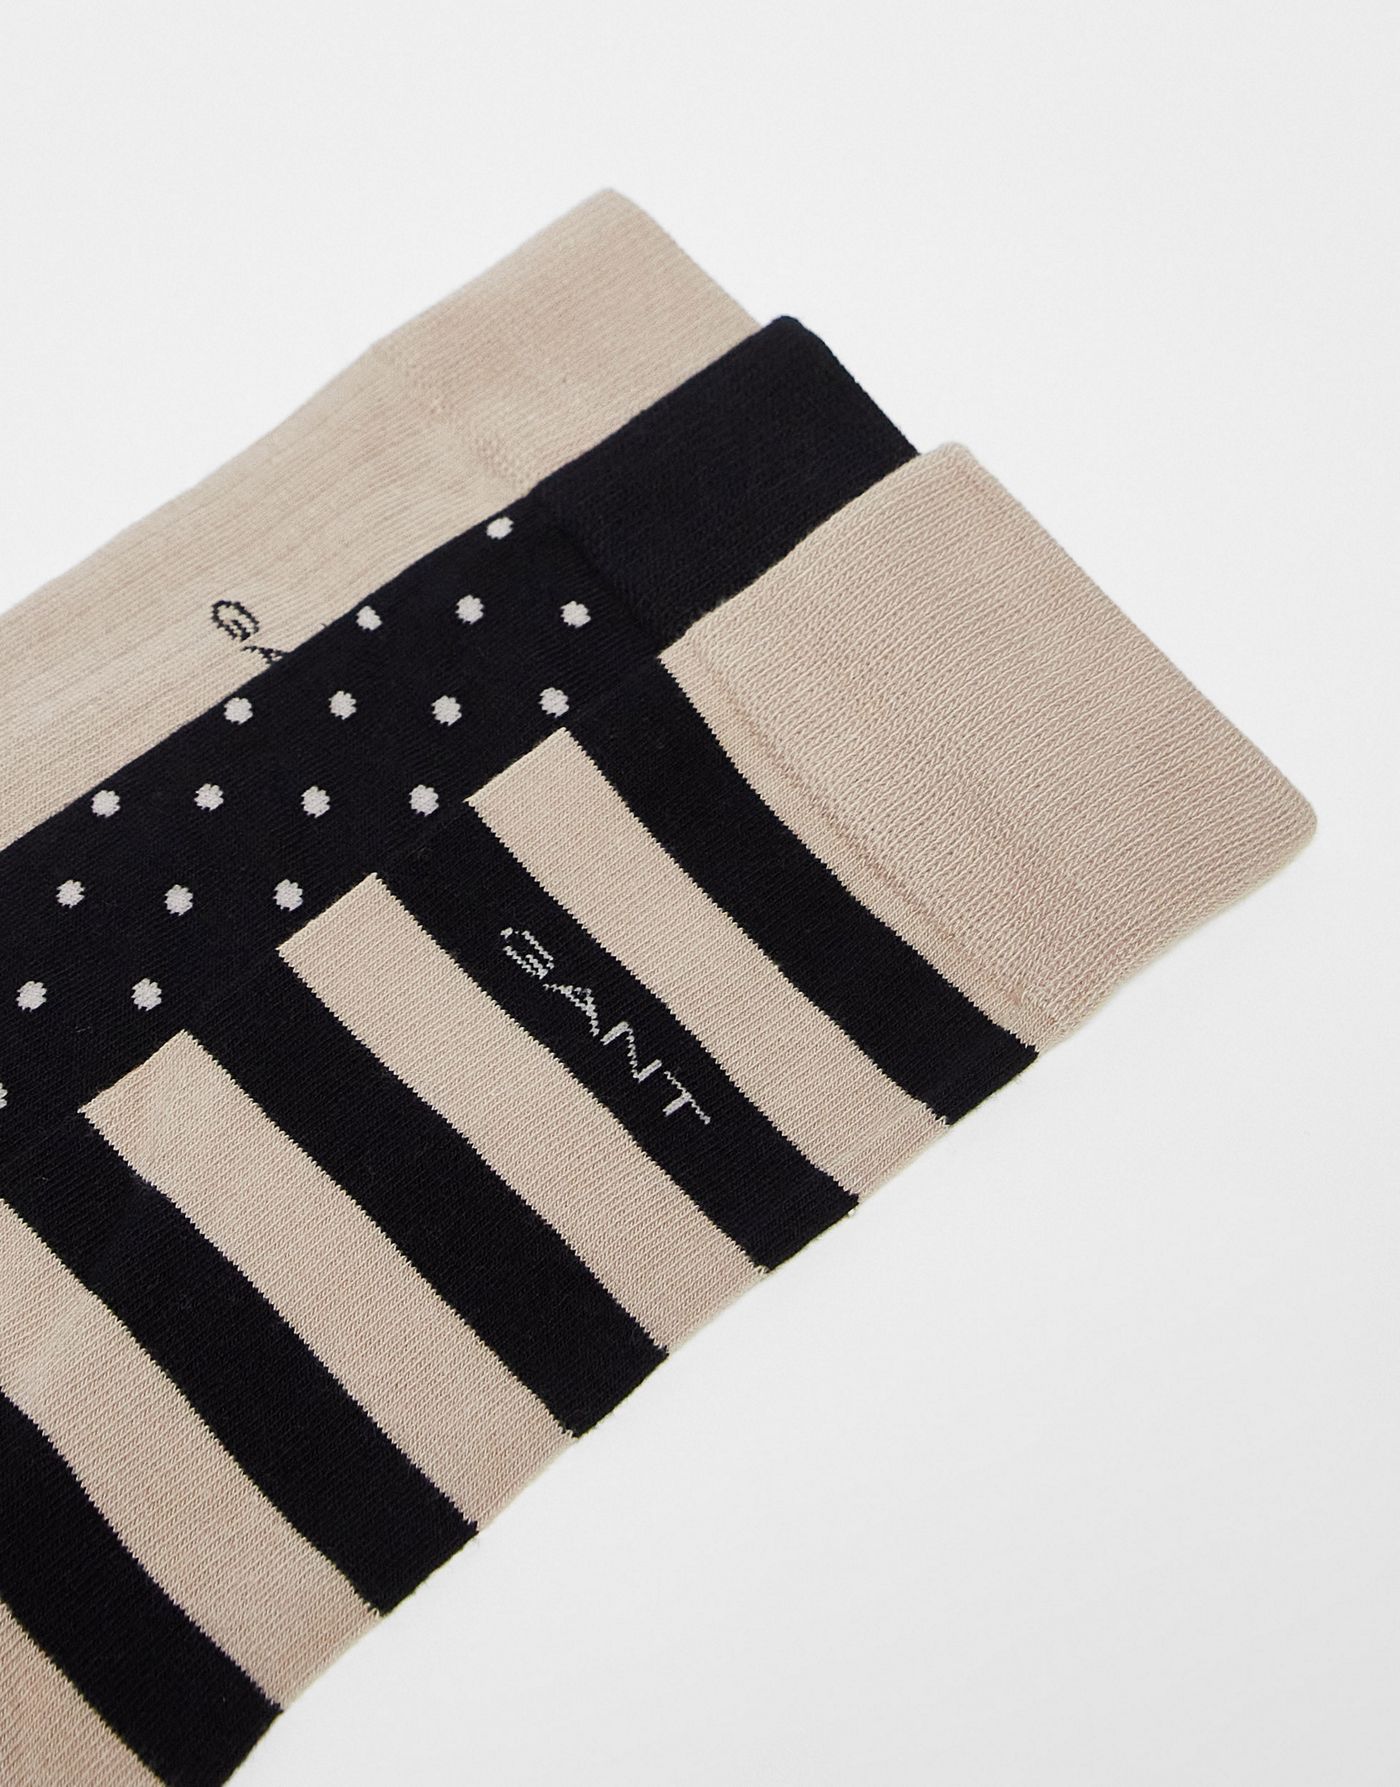 GANT 3 pack socks in cream polka dot and stripe with logo